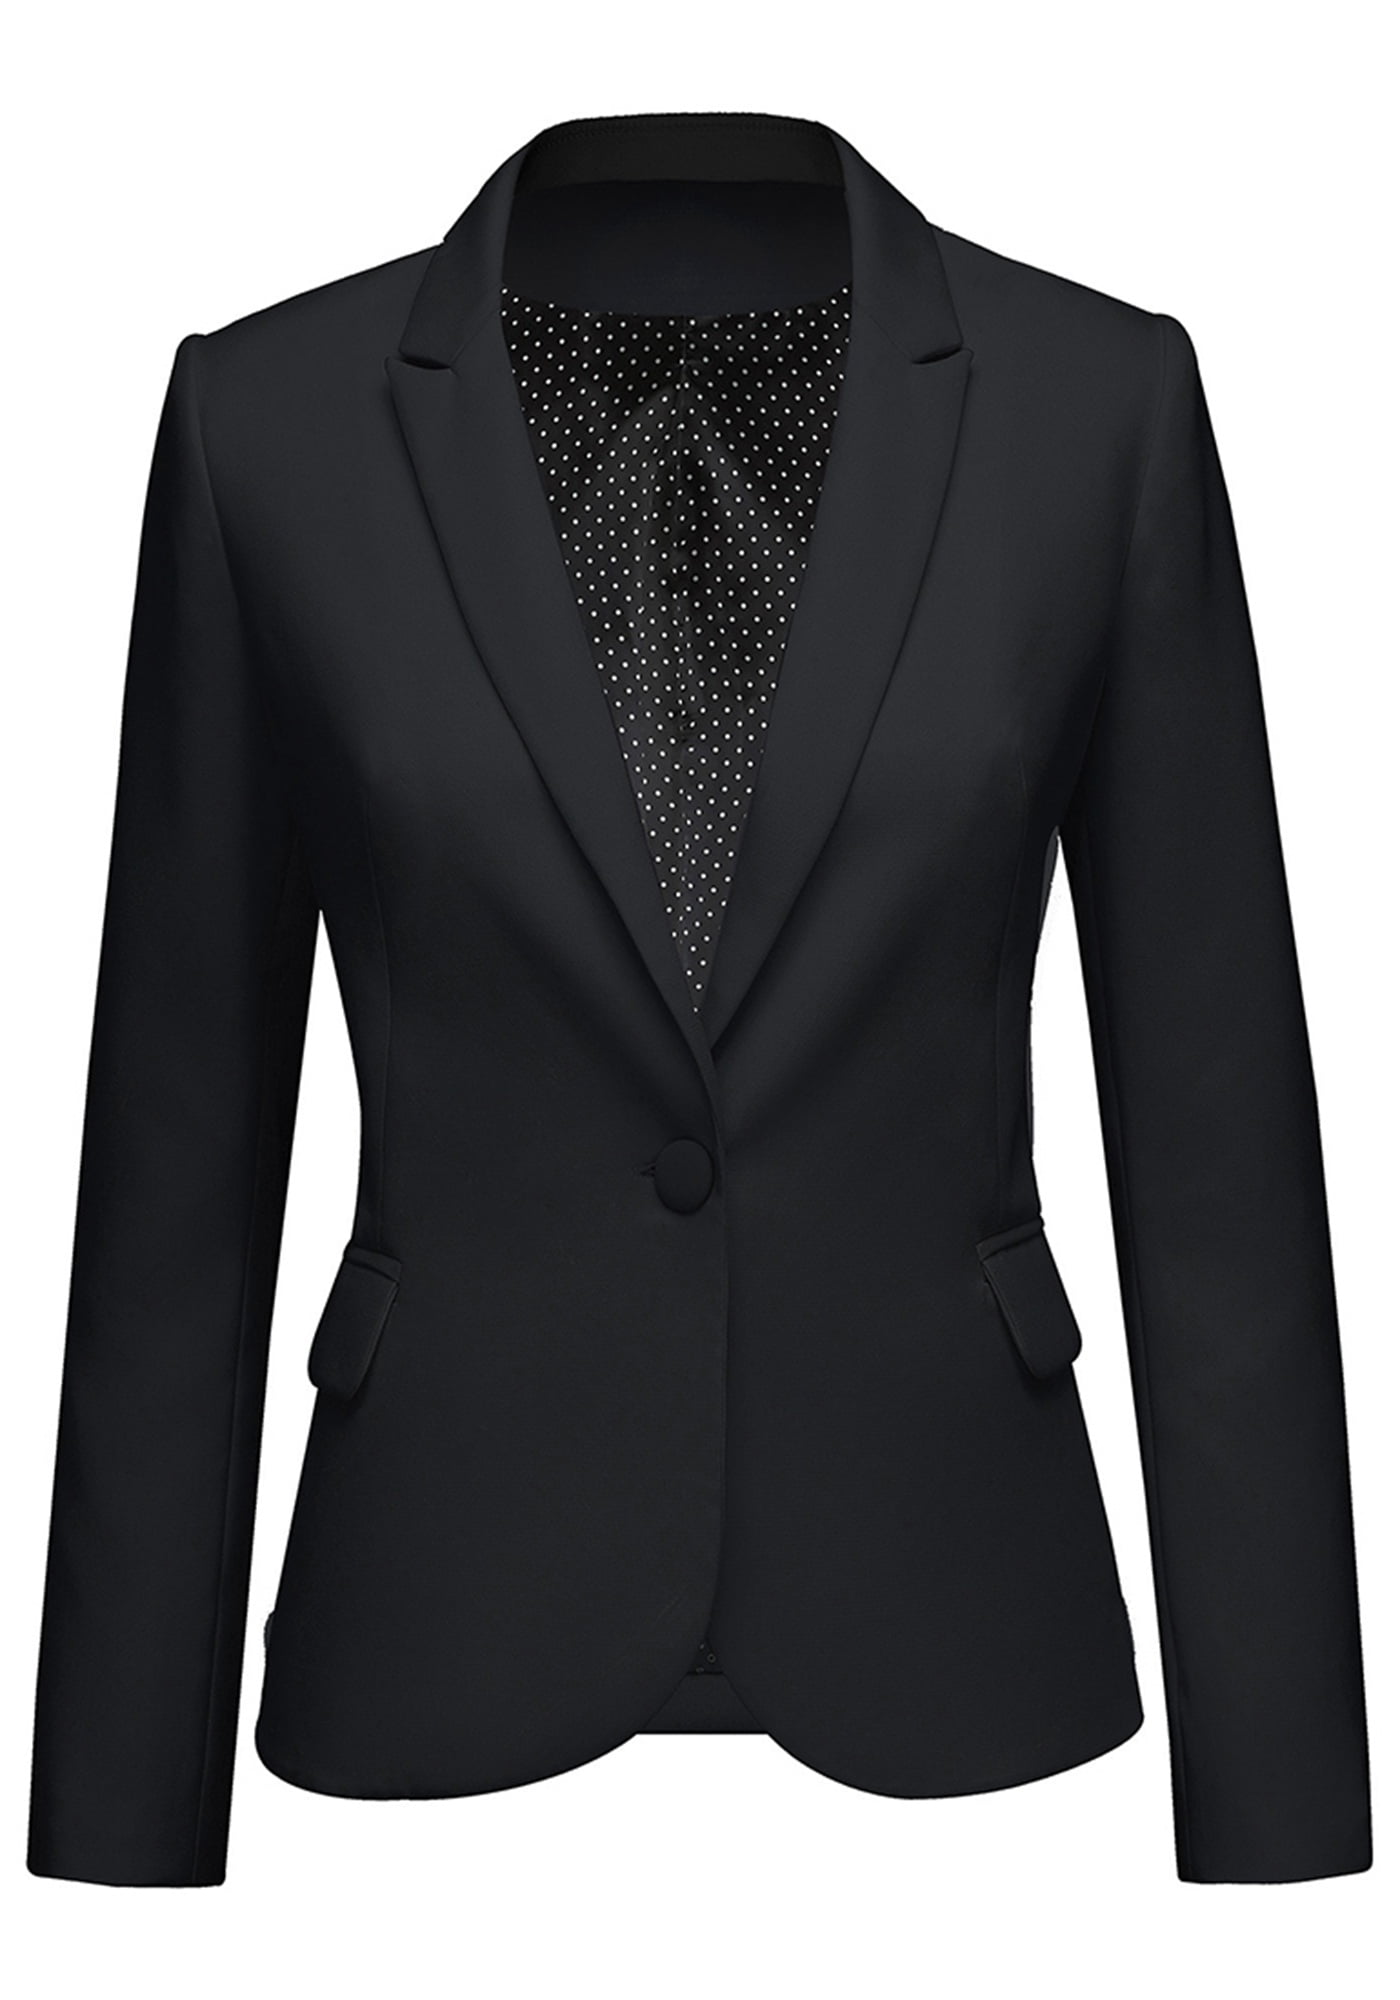 LookbookStore Women's Notch Lapel Pockets Button Work Office Blazer Open  Front Long Sleeve Jacket Suit Sizes XS-2XL Black 